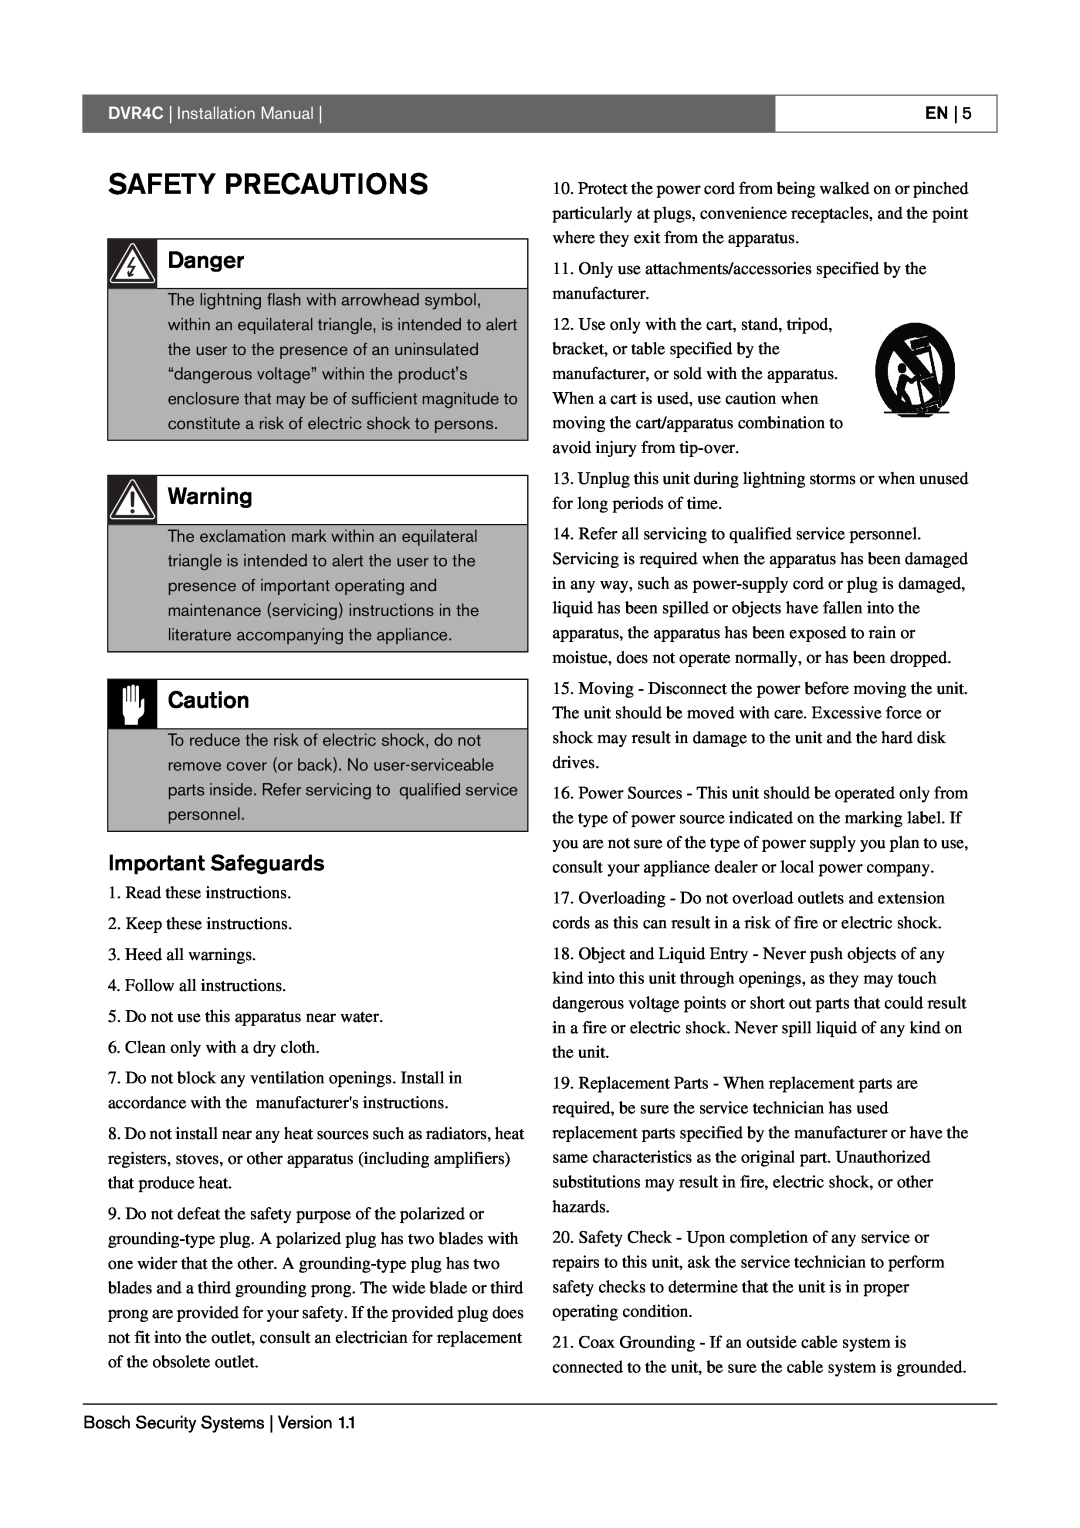 Bosch Appliances installation manual Safety Precautions, Danger, Important Safeguards, DVR4C | Installation Manual 